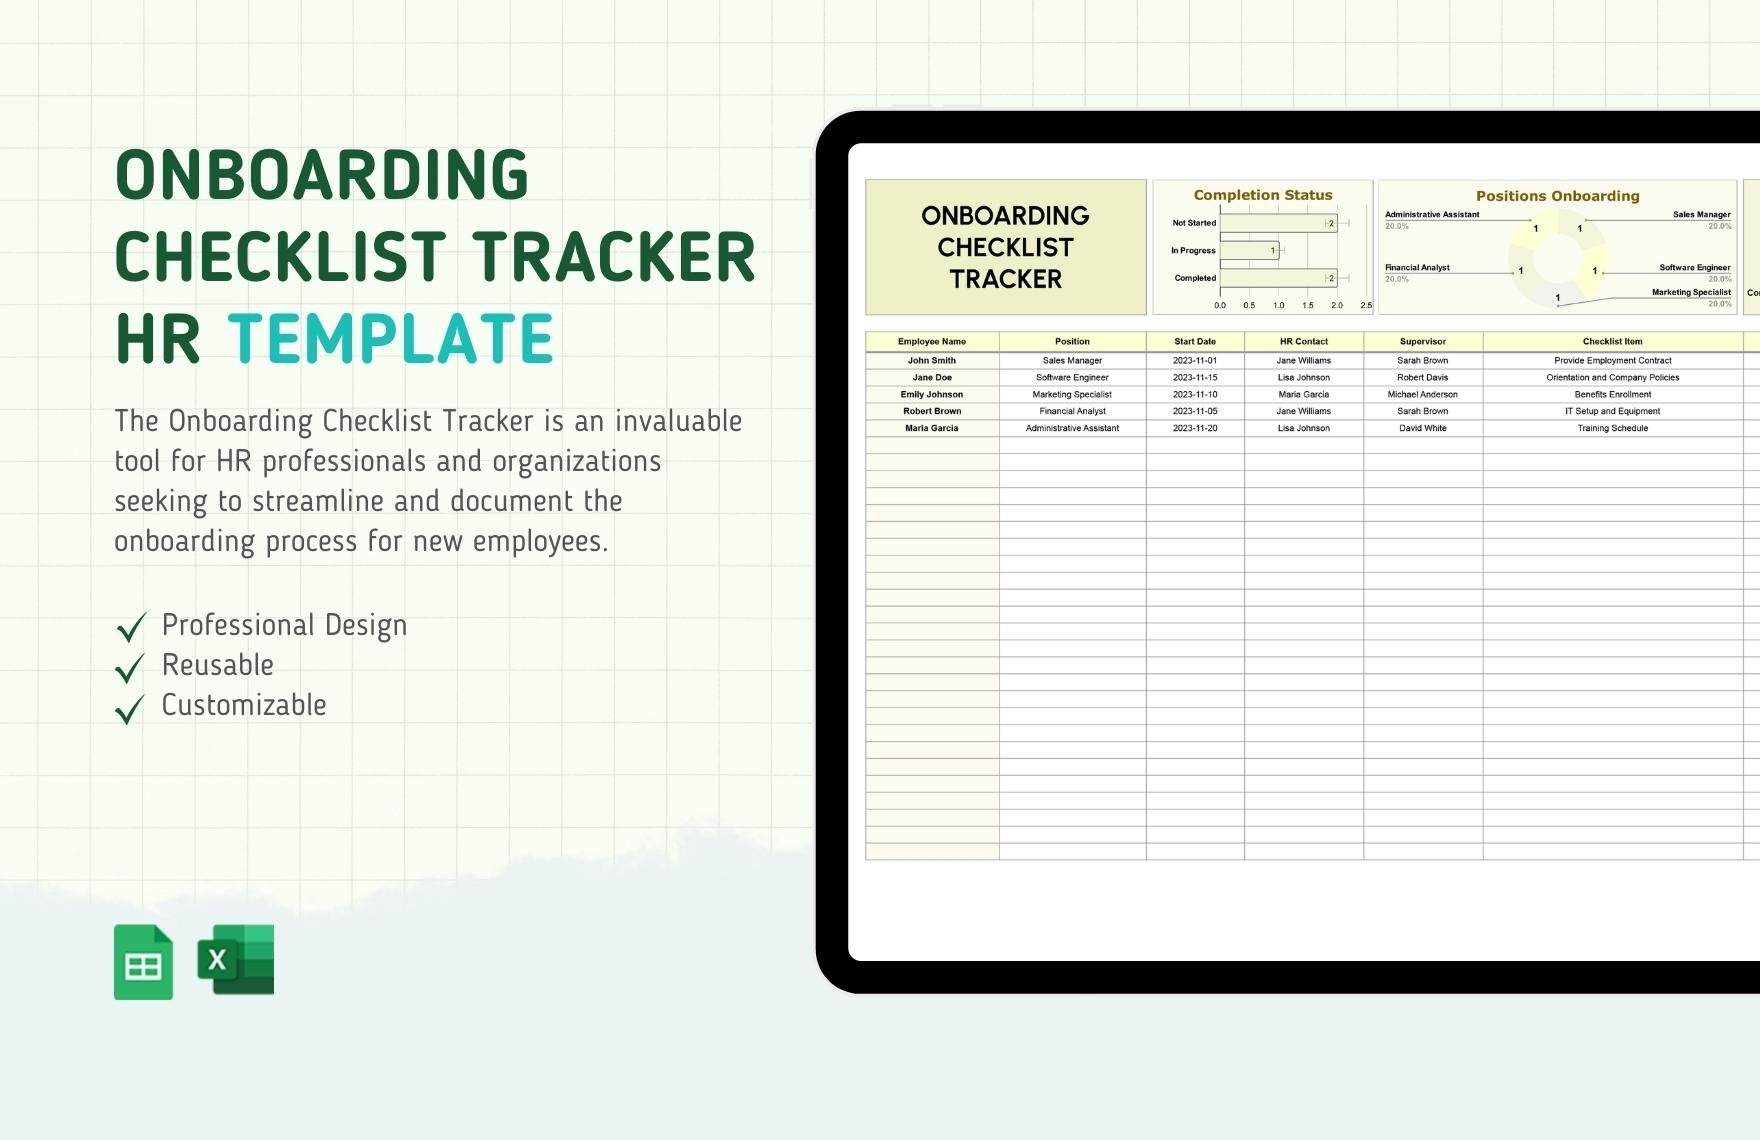 Onboarding Checklist Tracker HR Template